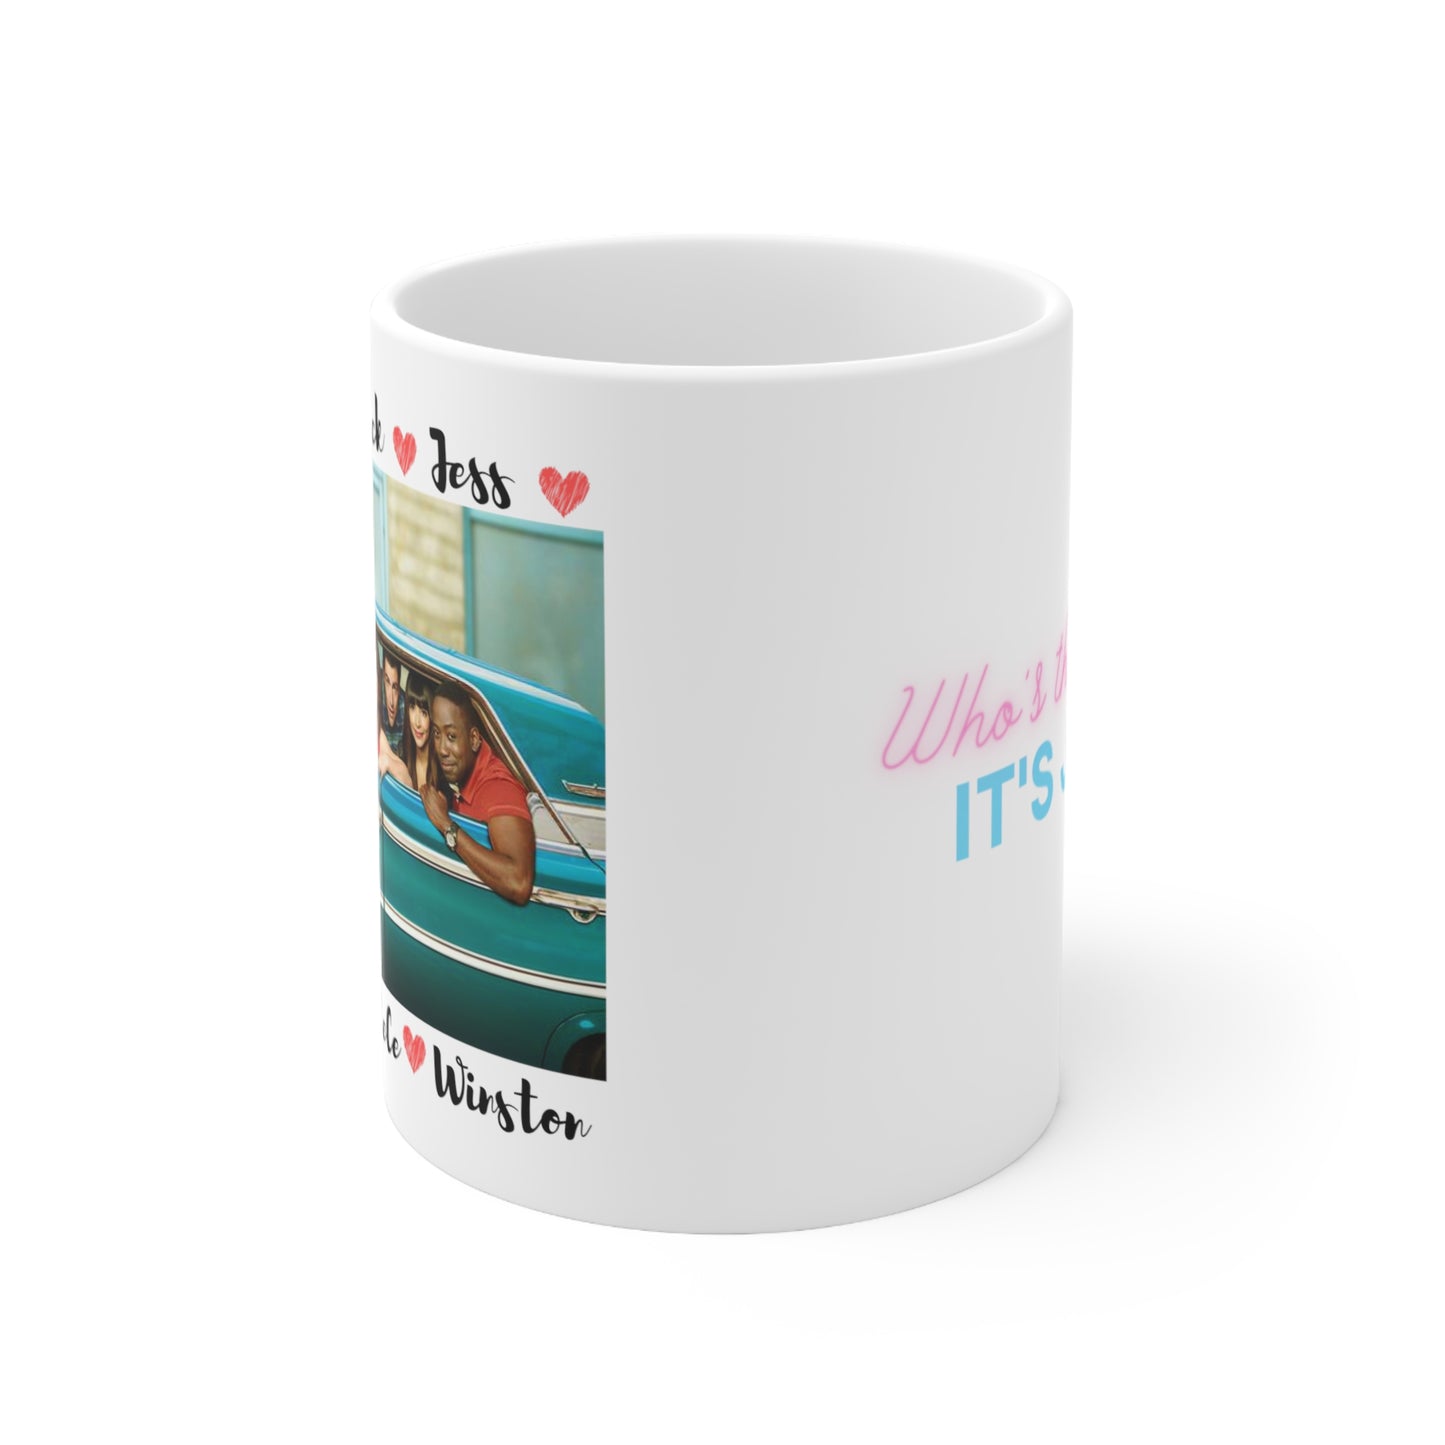 New Girl fan mug (11 oz) - New Girl show cast cup - Fan of New girl gift